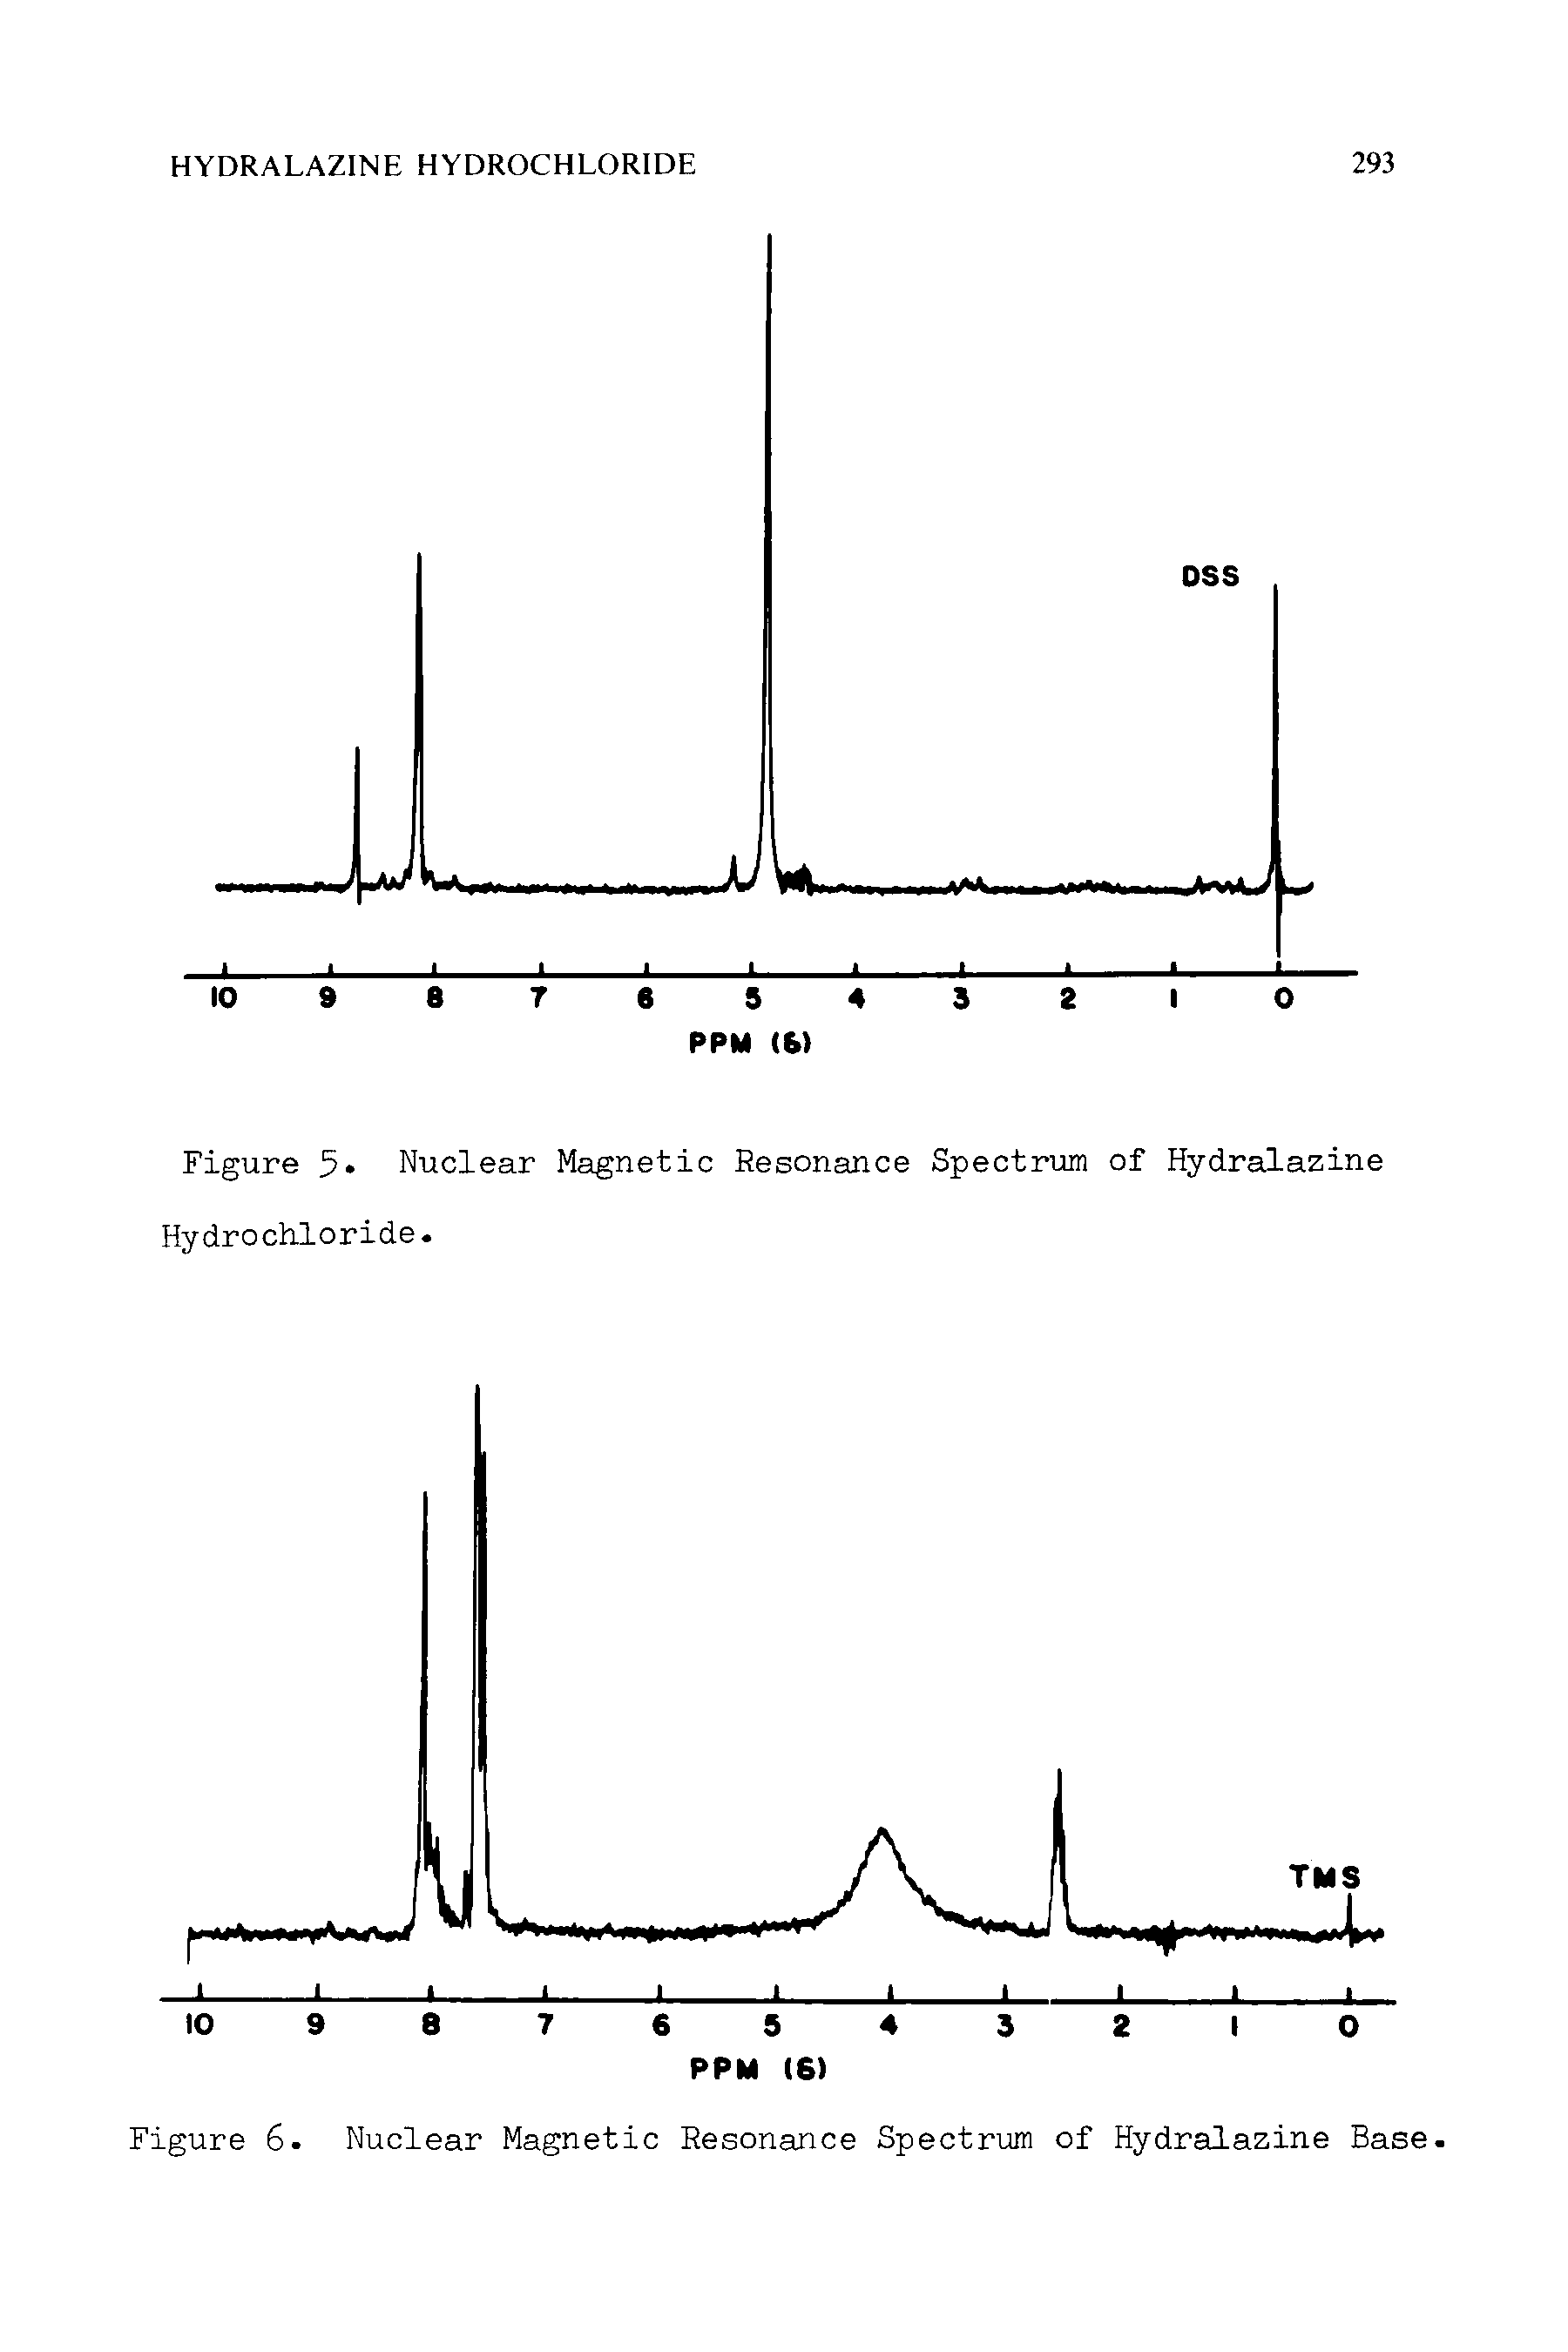 Figure Nuclear Magnetic Resonance Spectrum of Hydralazine Hydrochloride.